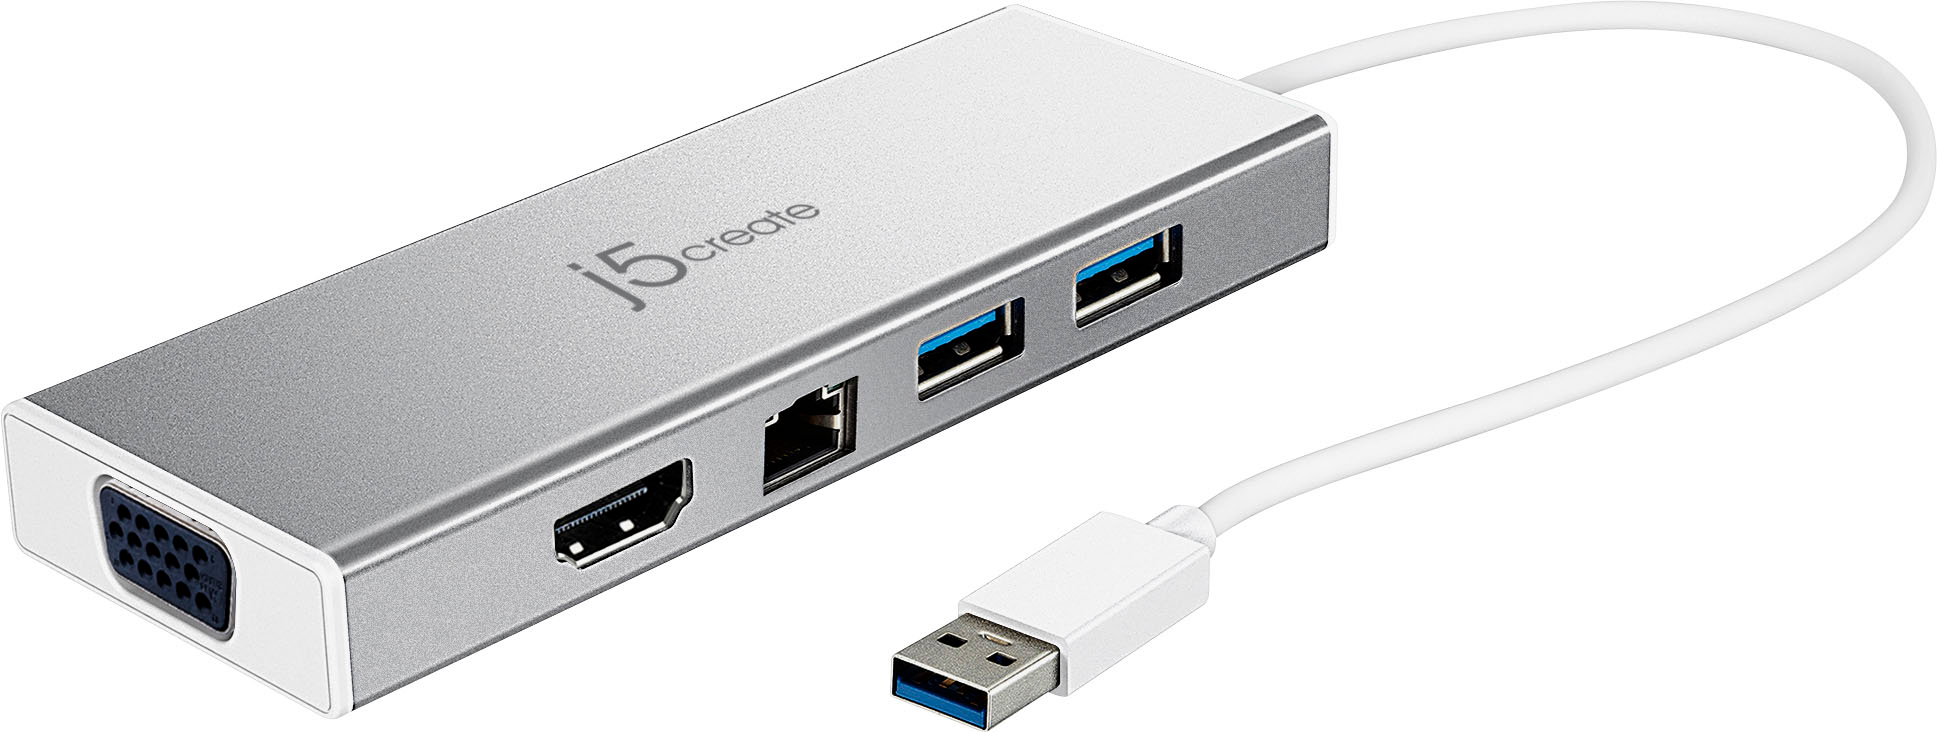 j5create USB 3.0 Mini Dock Silver JUD380 - Best Buy